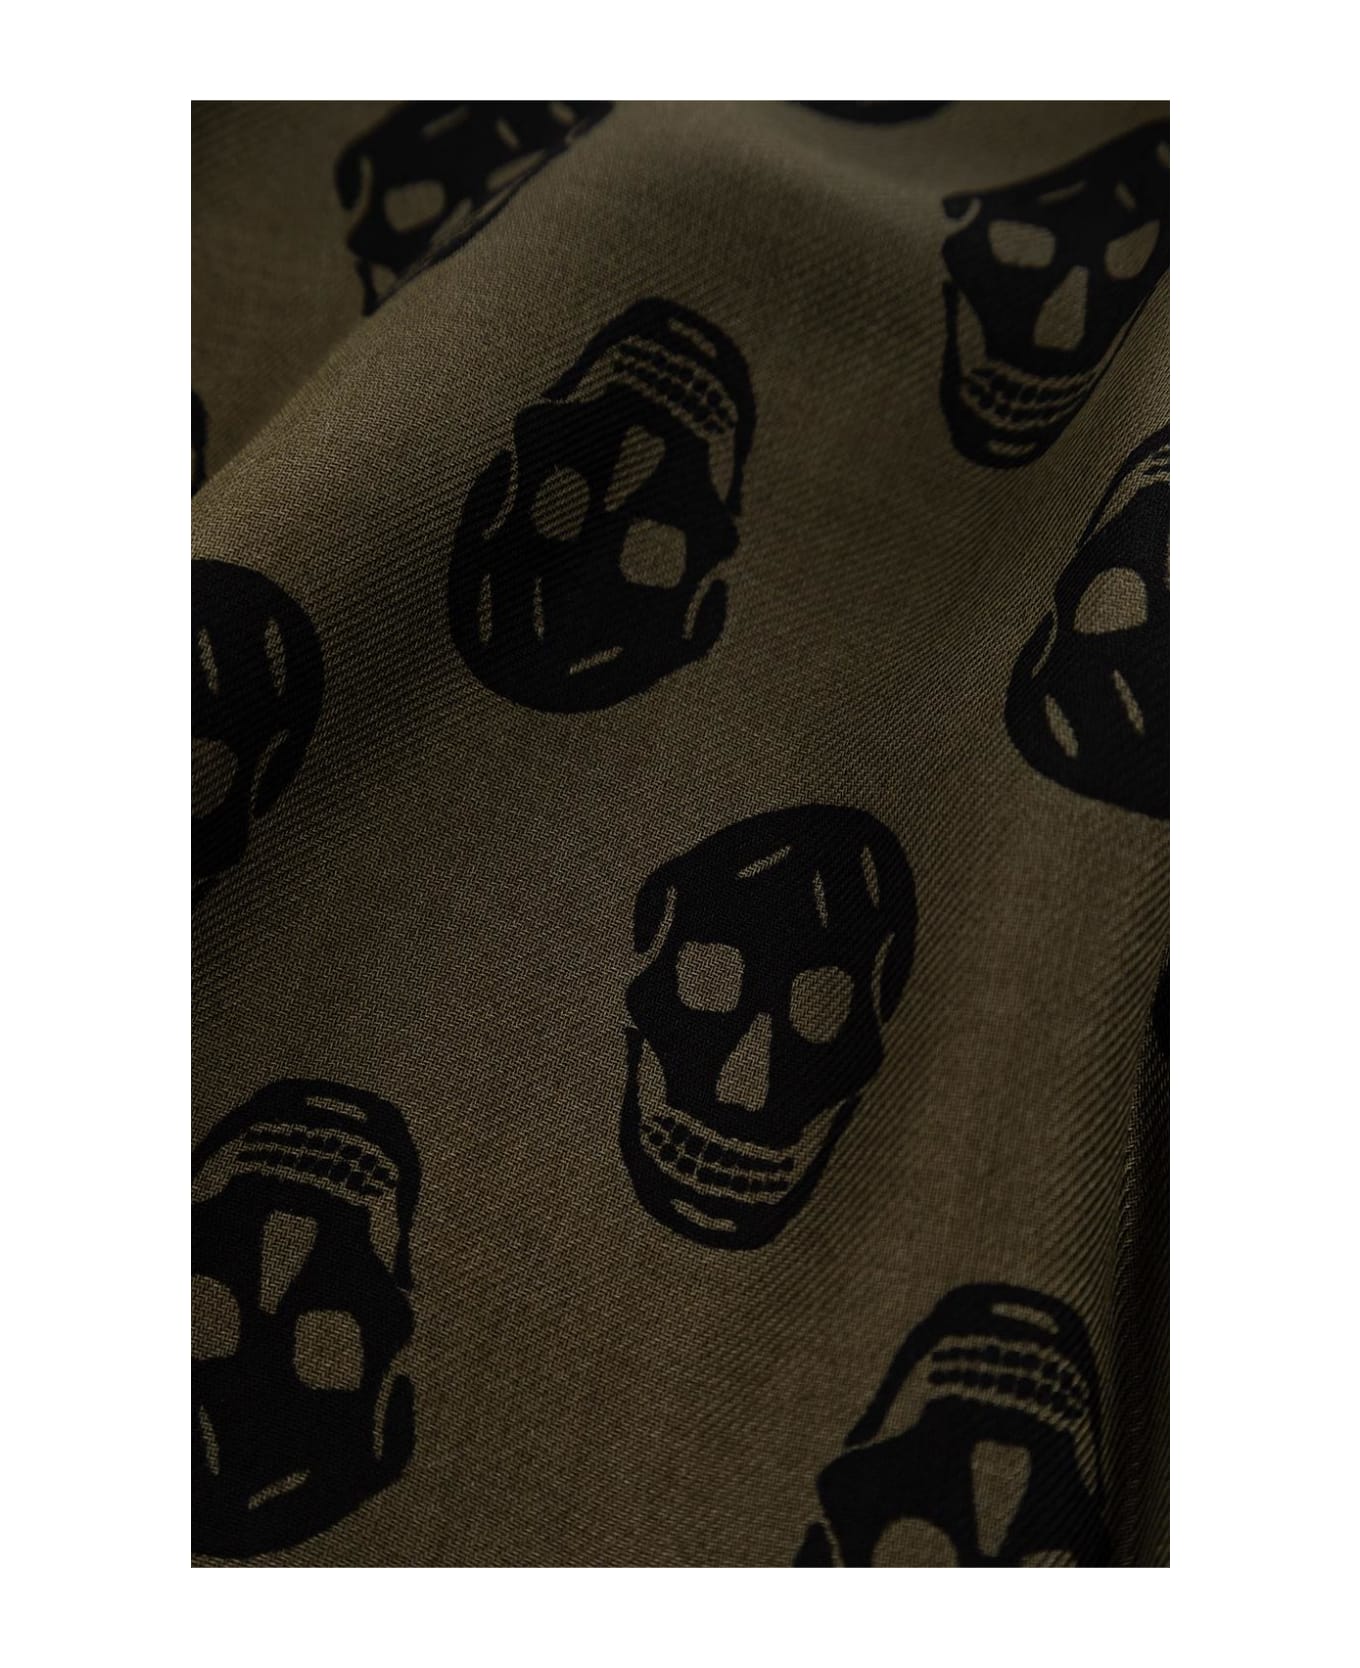 Alexander McQueen Skull Fringed Scarf - Kaki Black スカーフ